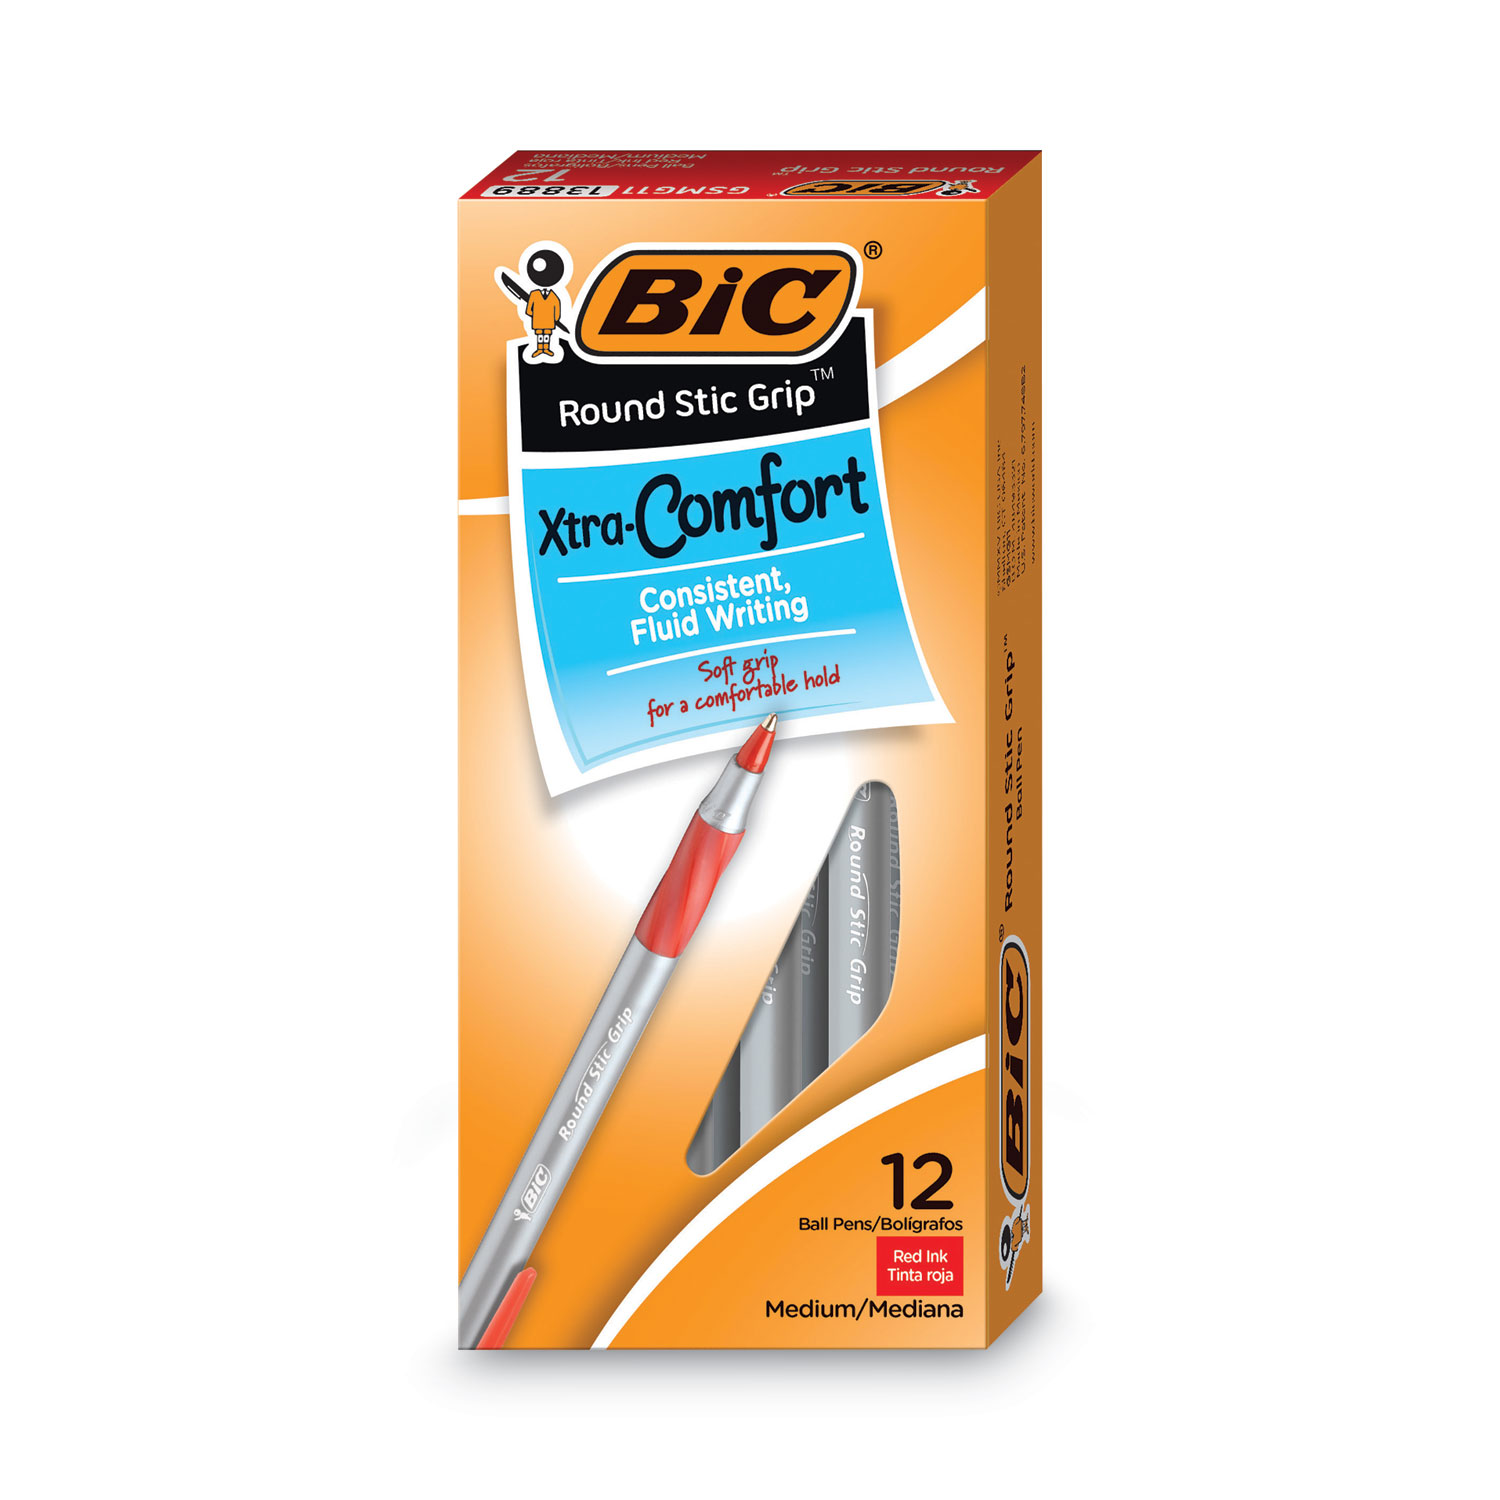 Round Stic Grip Xtra Comfort Ballpoint Pen, Easy-Glide, Stick